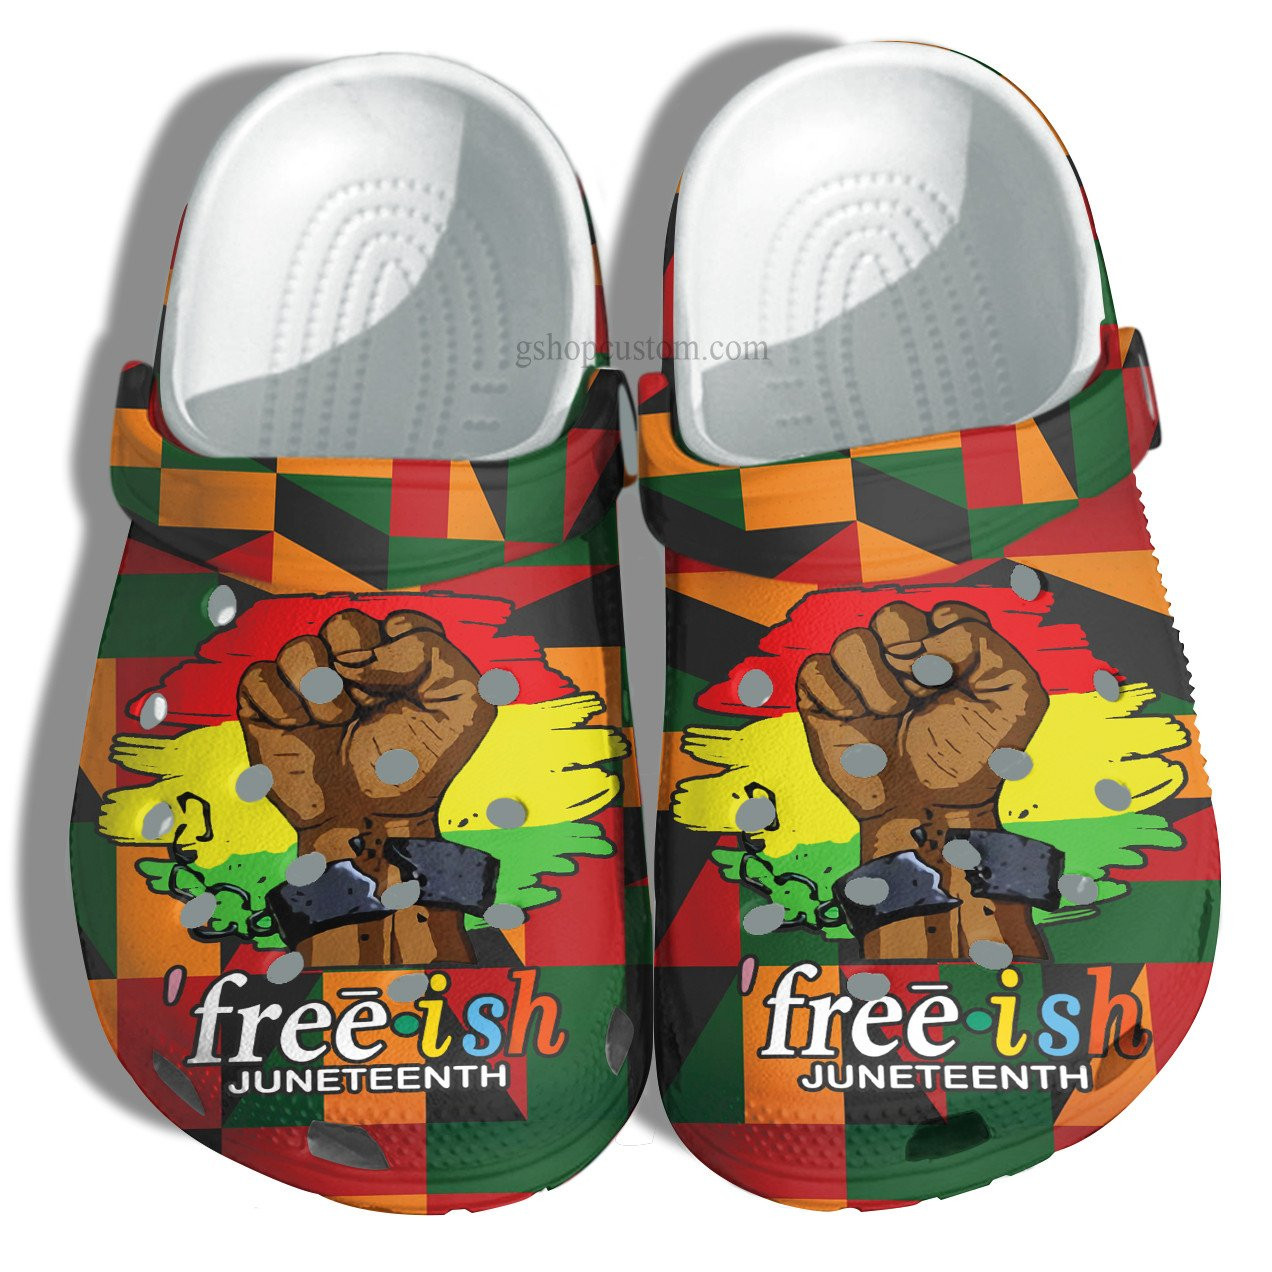 Freeish Juneteenth Africa Culture Crocs Shoes Gift Black Girl - America Free-Ish Juneteenth Shoes Croc Clogs